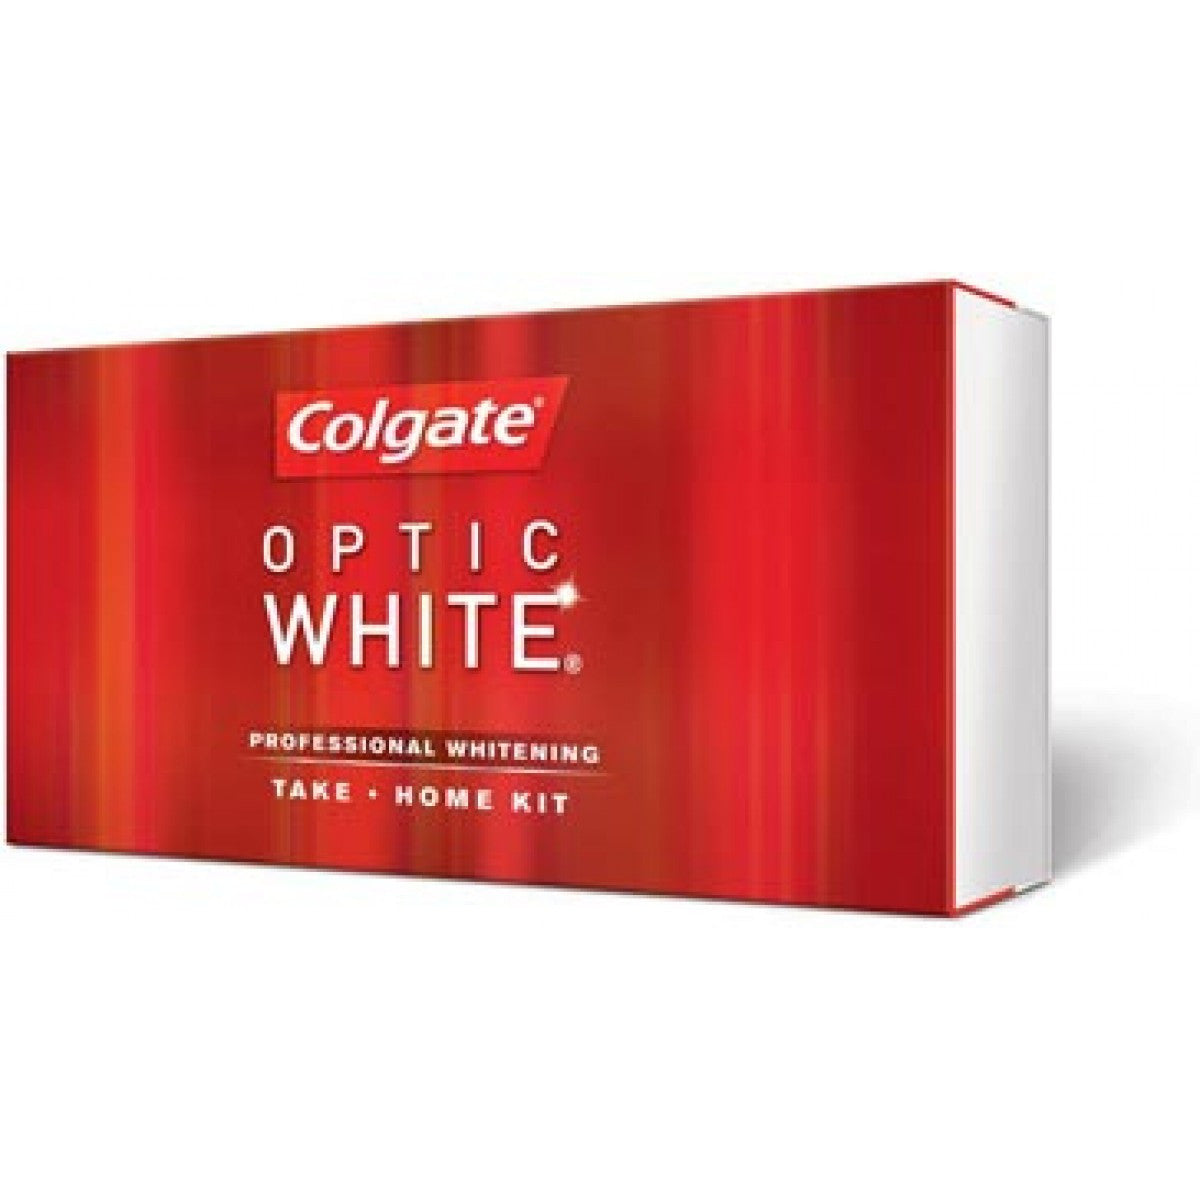 Colgate professional teeth whitening gel